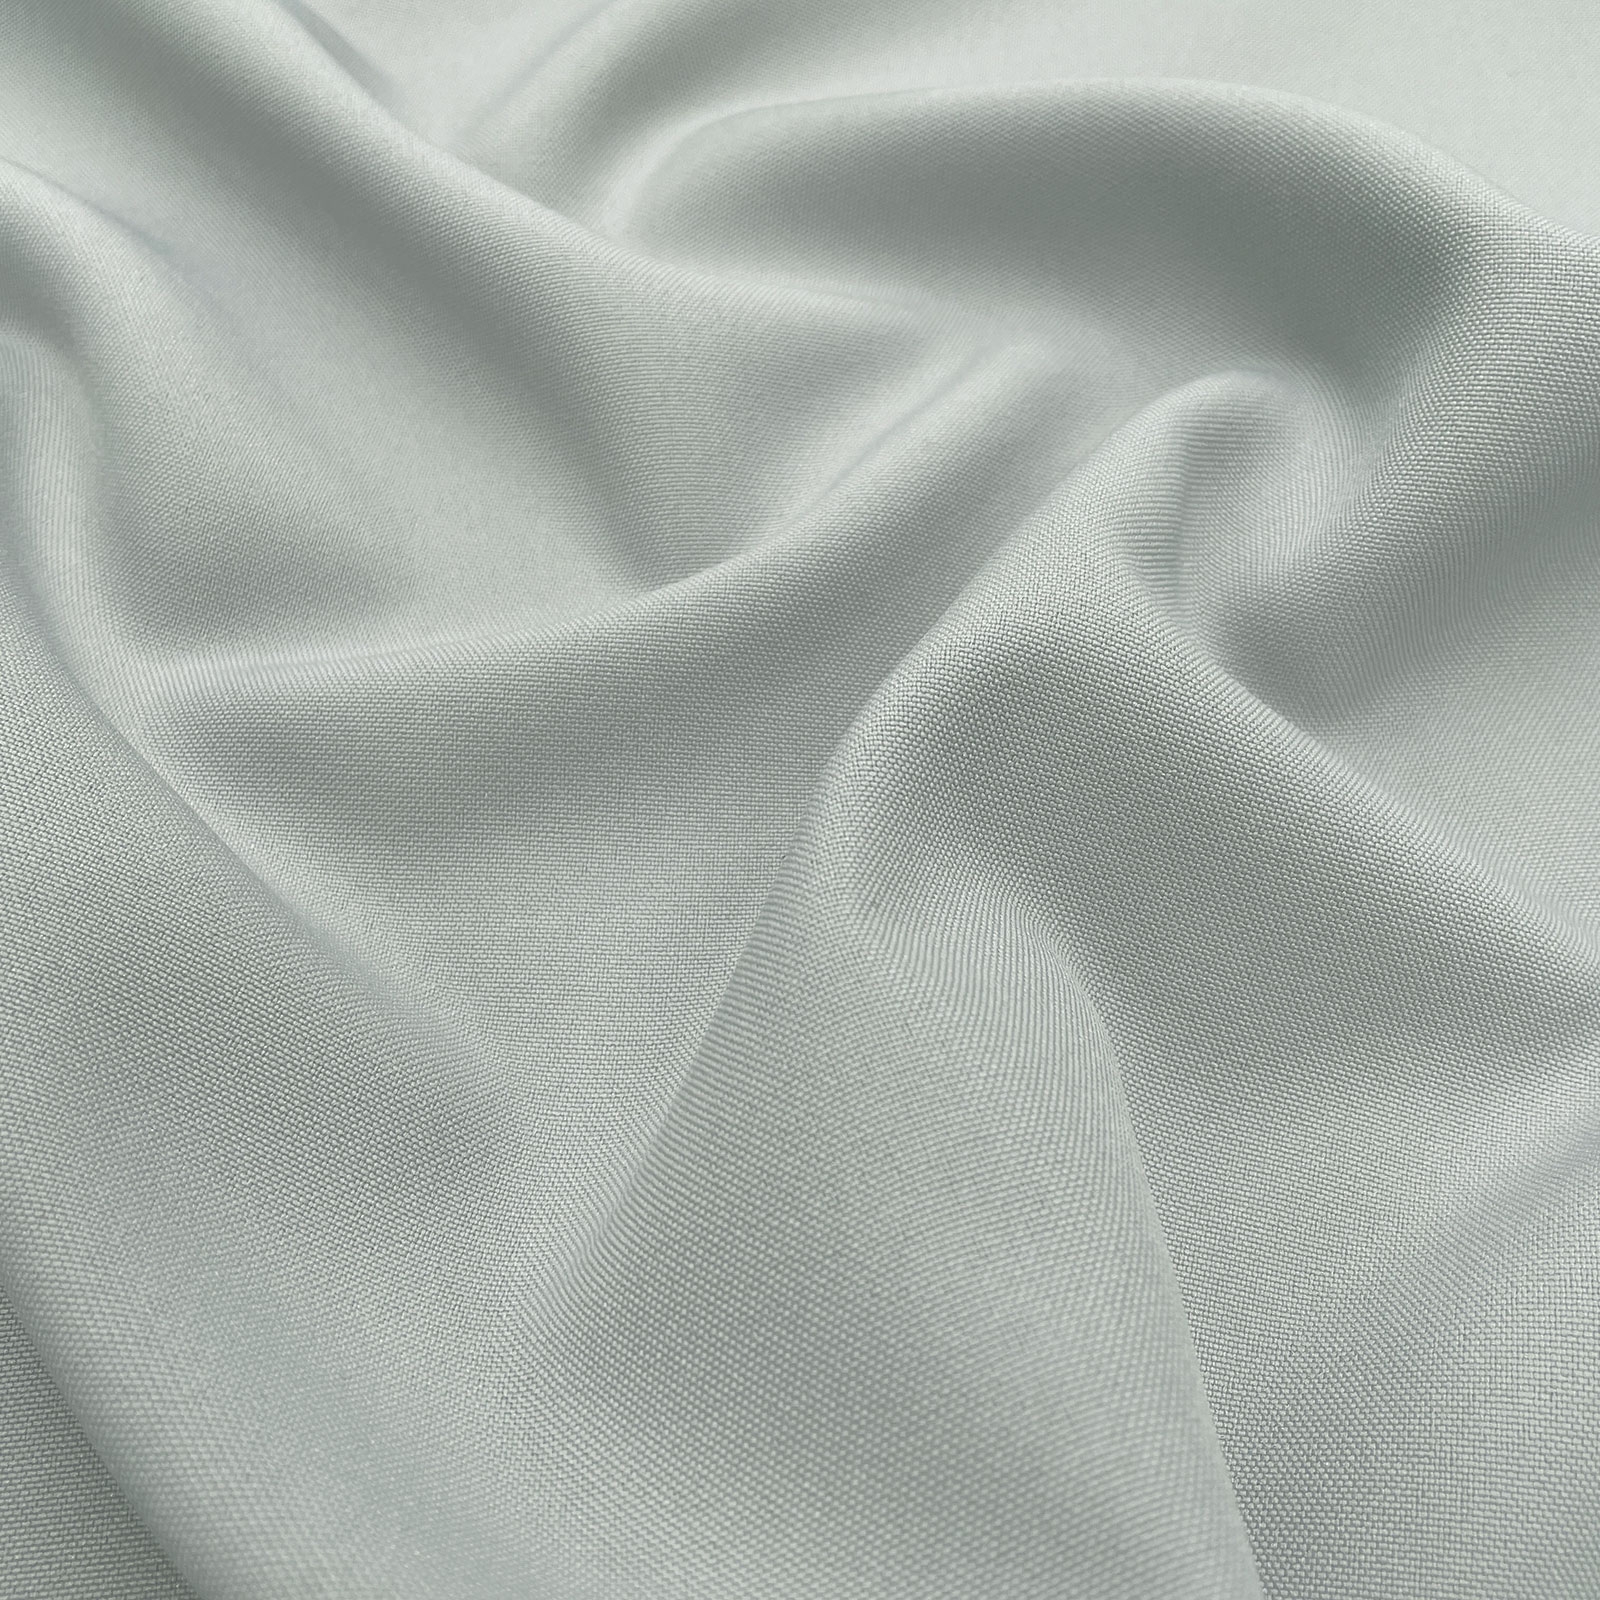 Trekking Functional fabric - slightly elastic & breathable - Light Grey